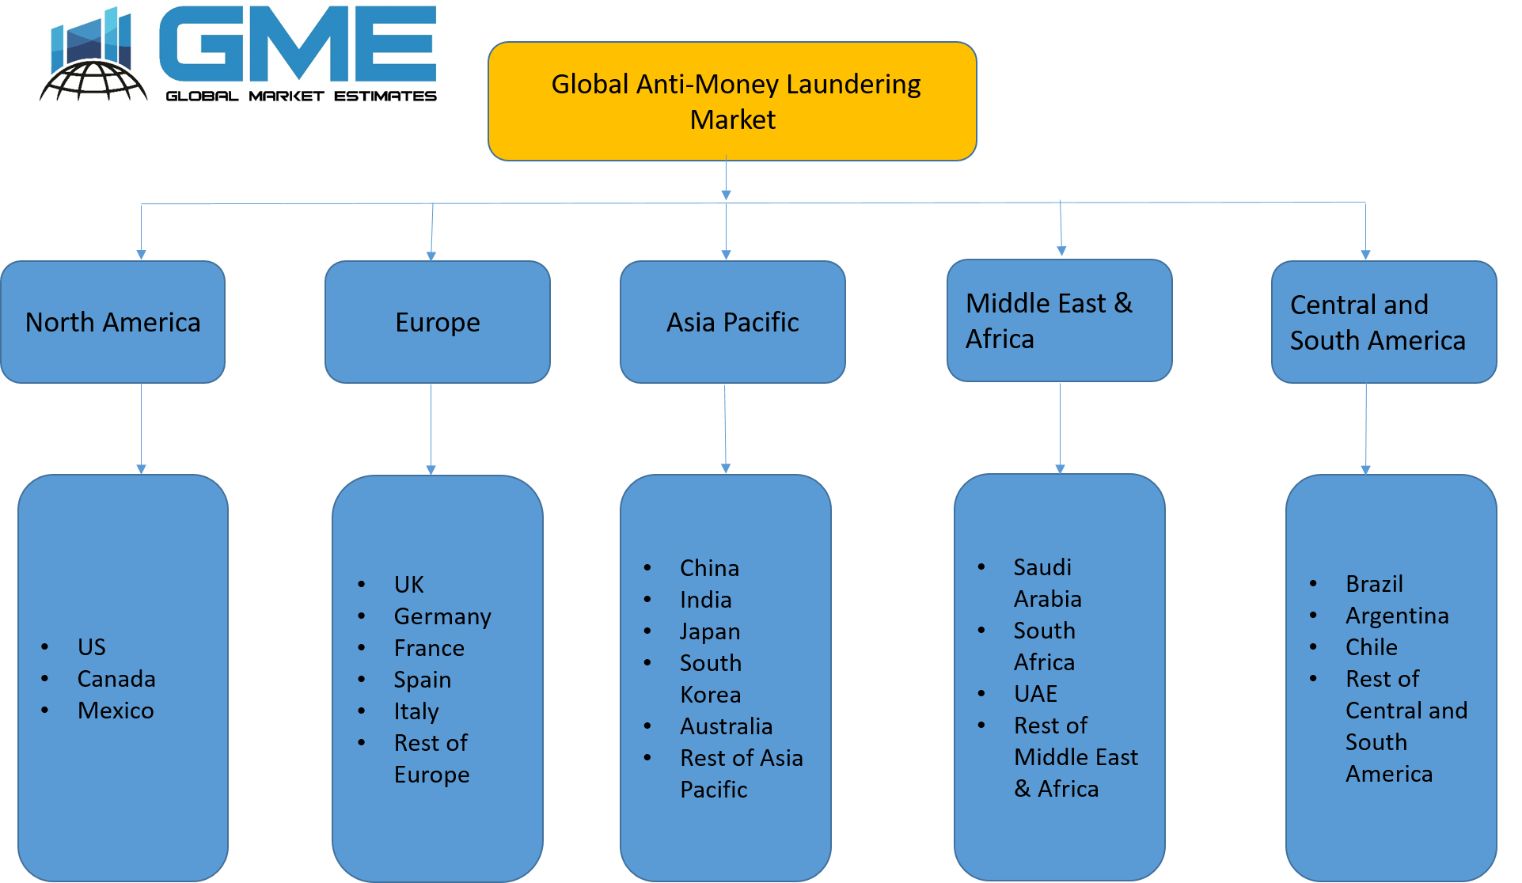 Global Anti-Money Laundering Market - Regional Analysis